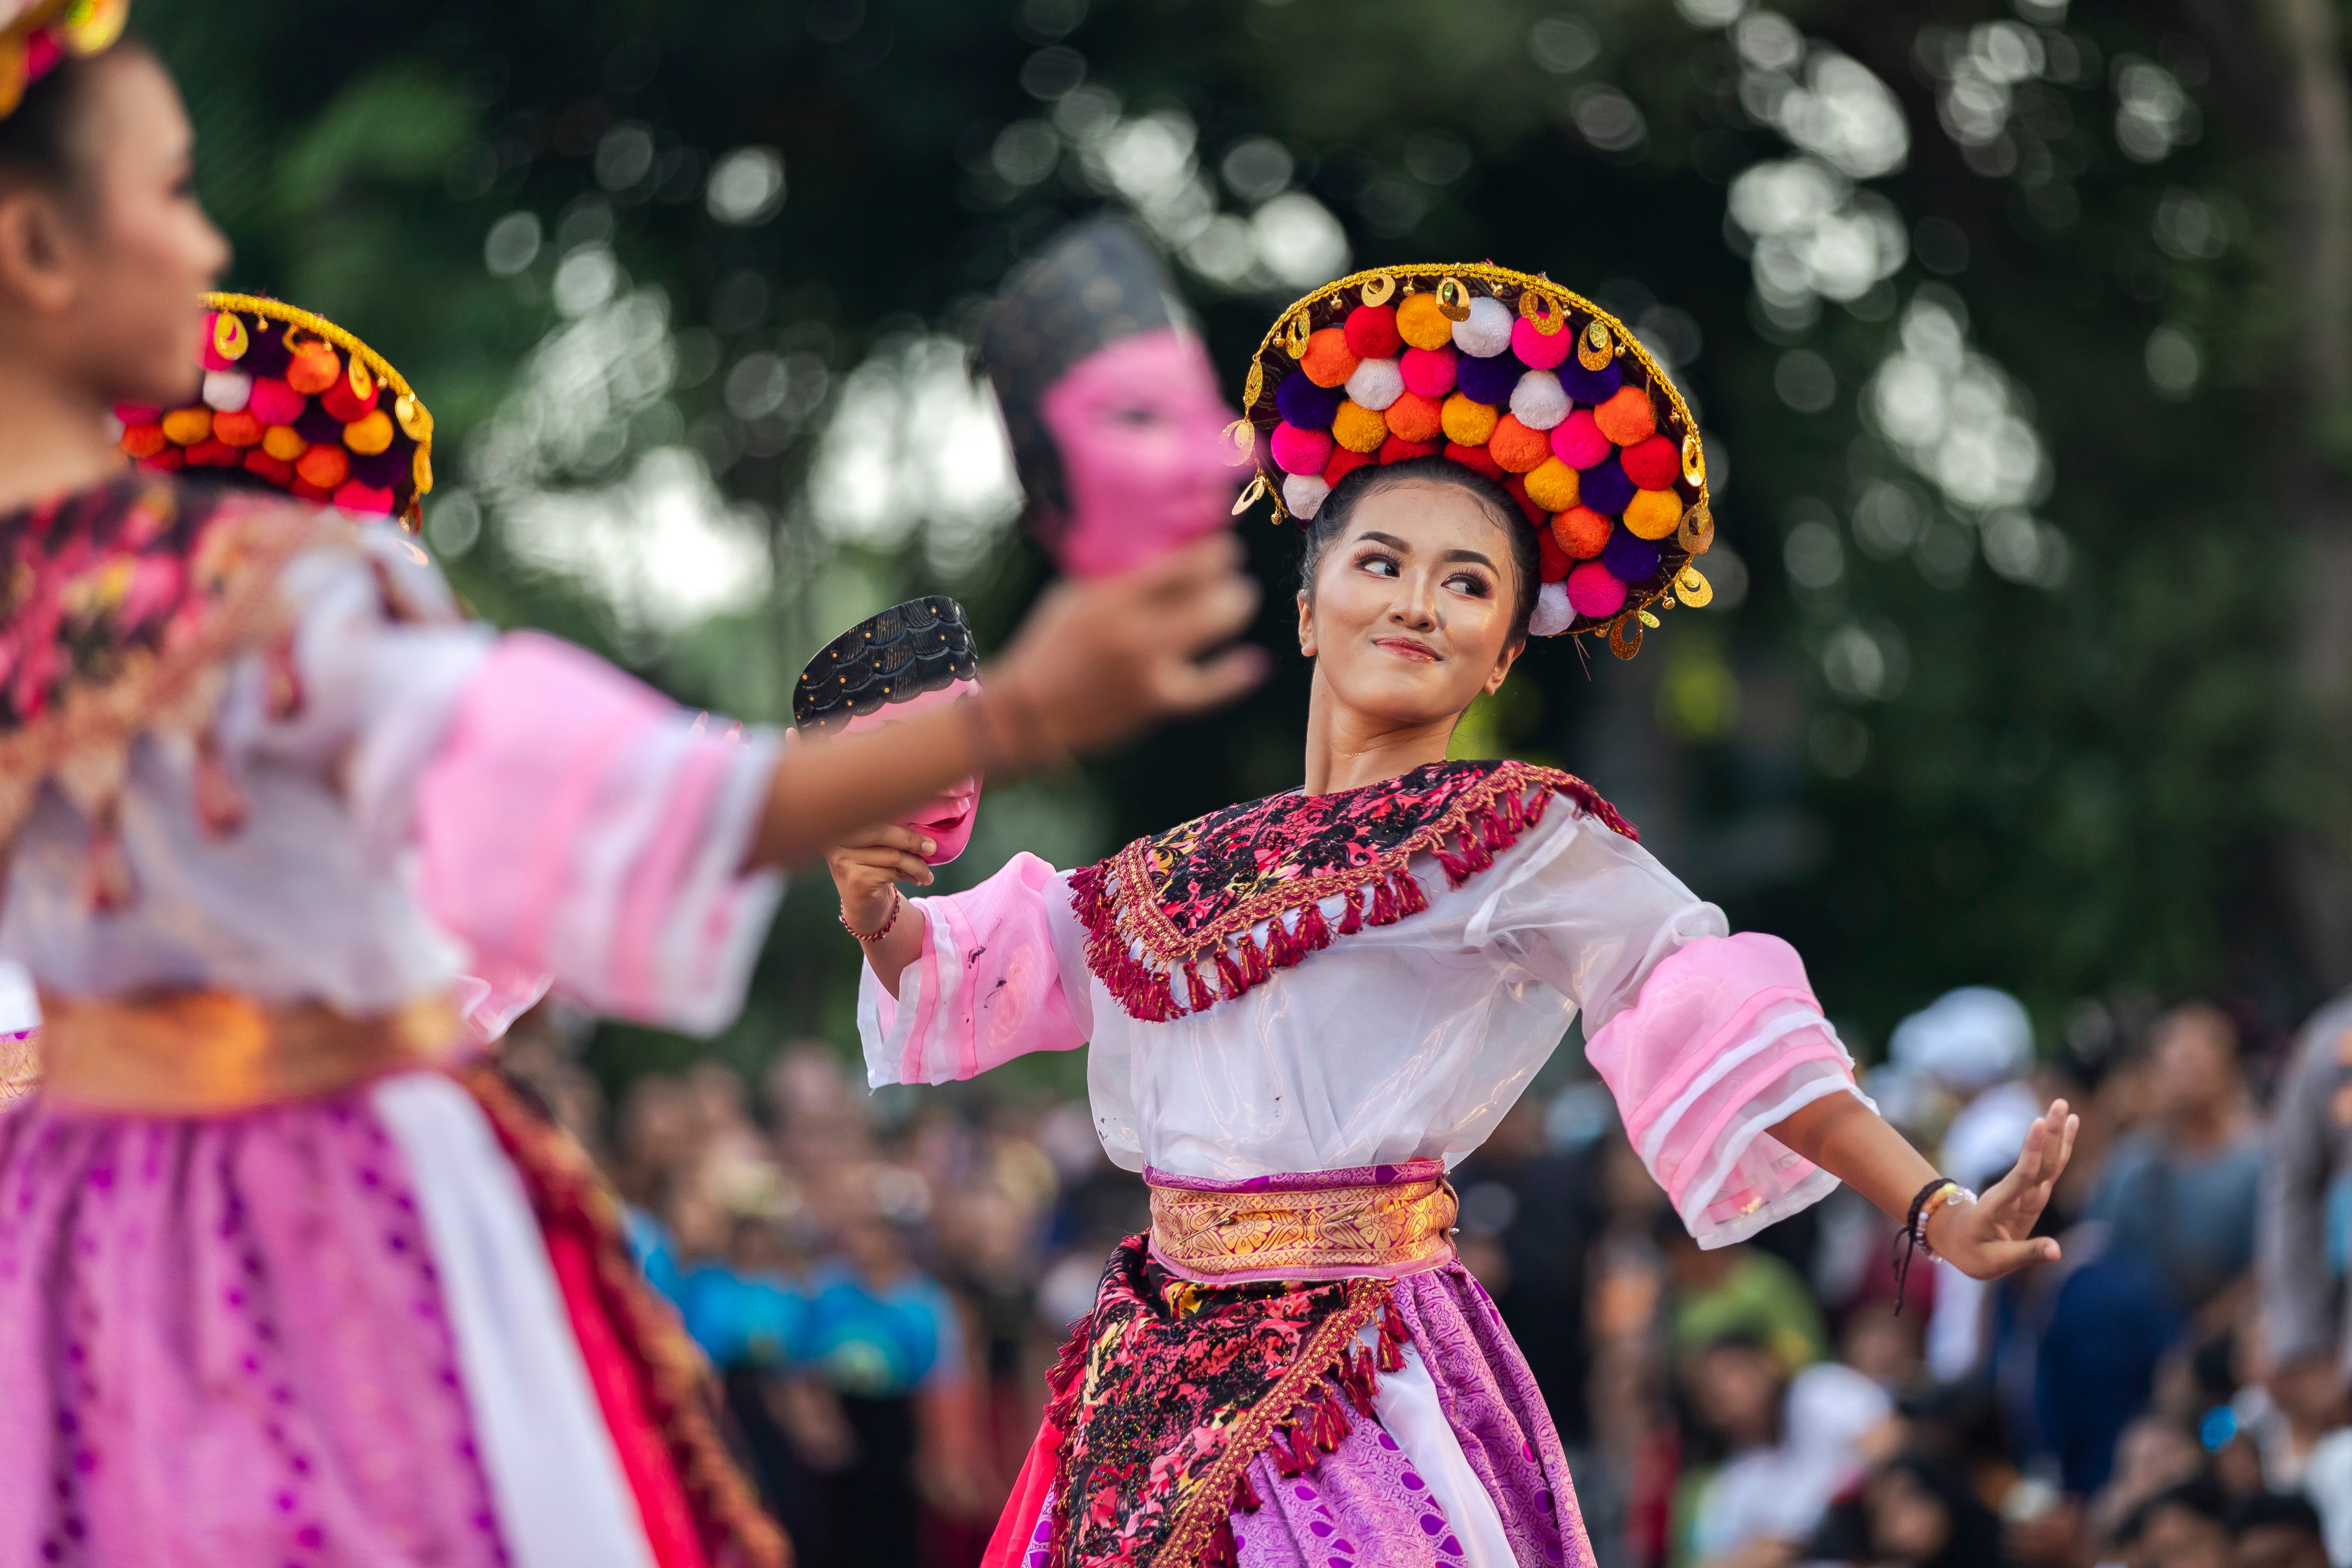 Performers participate in a cultural parade in Bali